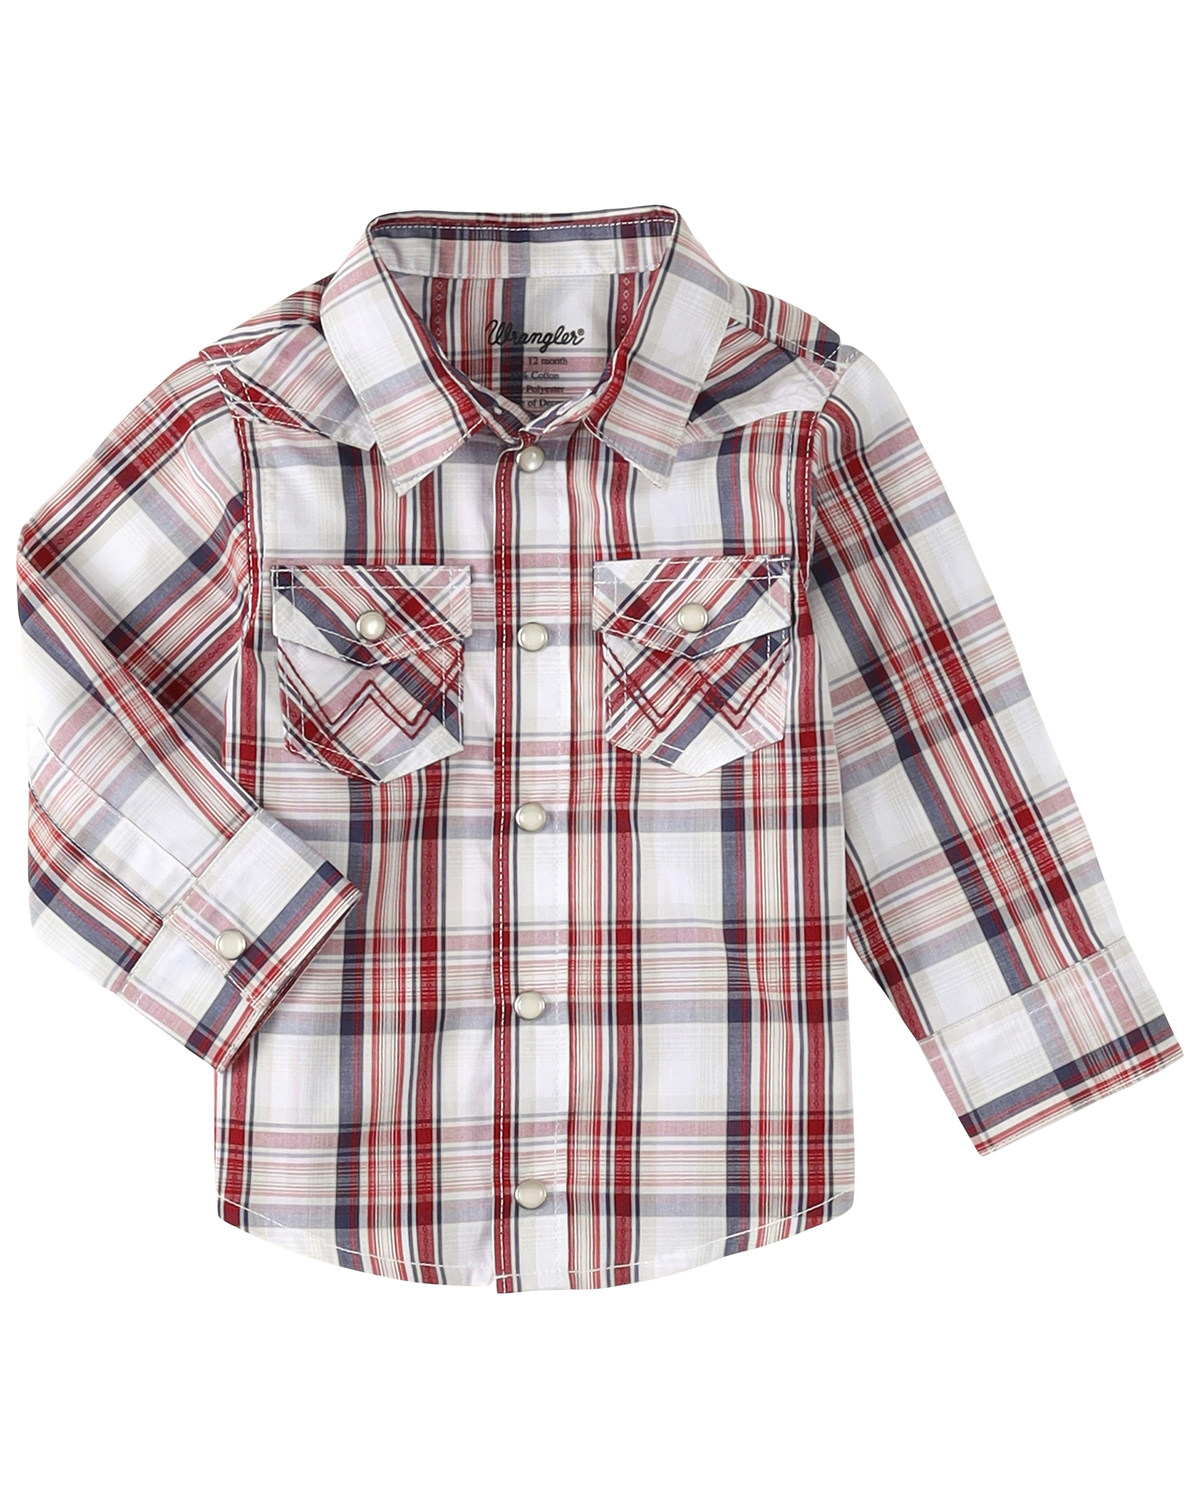 Wrangler Infant Boys' Plaid Print Long Sleeve Pearl Snap Western Shirt